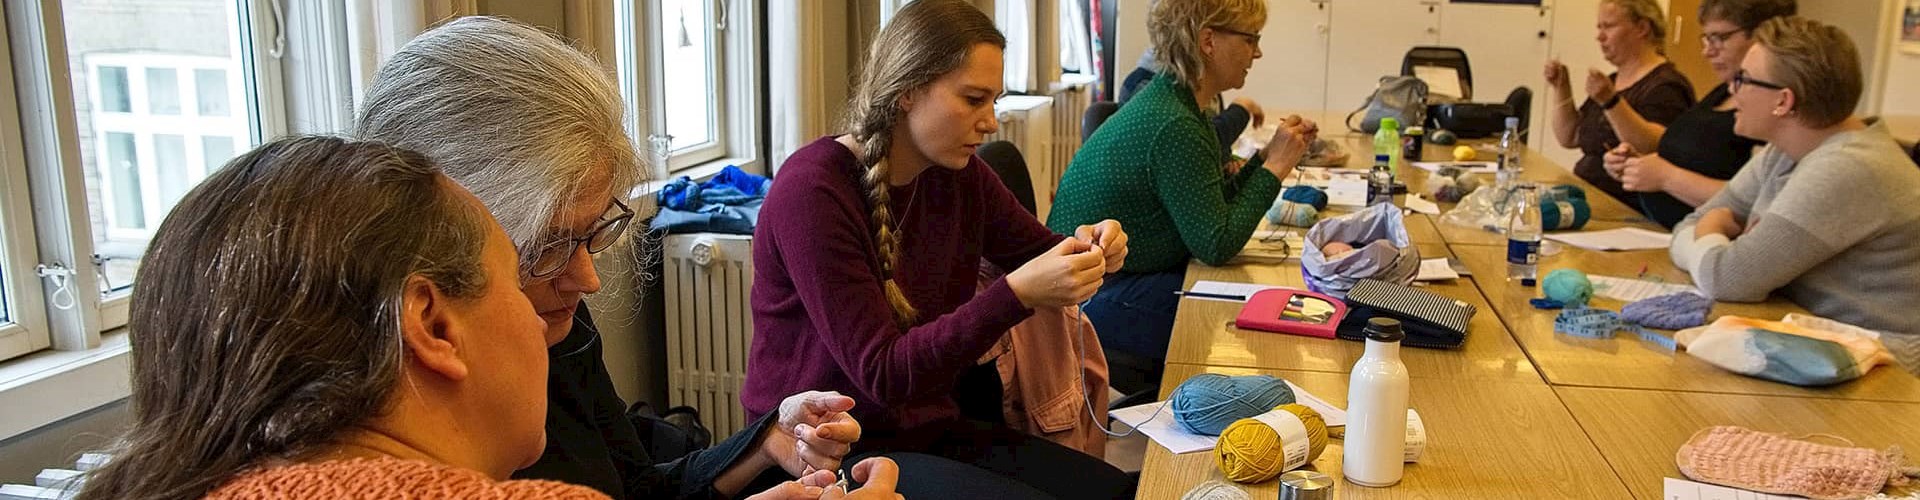 Hækle-kursus ved FOF Aarhus, underviser Lotte Mouritsen